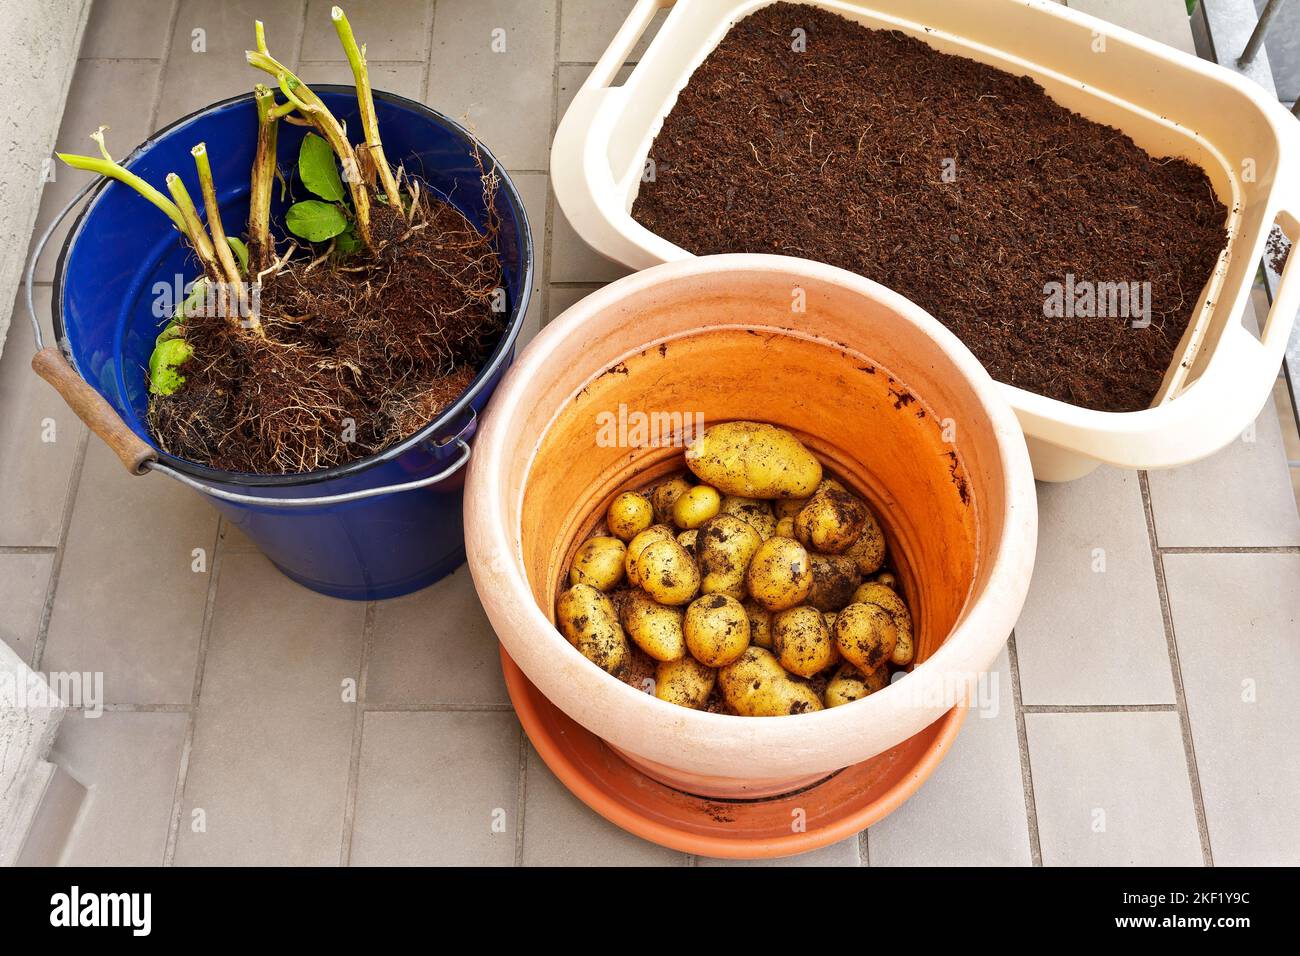 Grow bag potato hi-res stock photography and images - Alamy